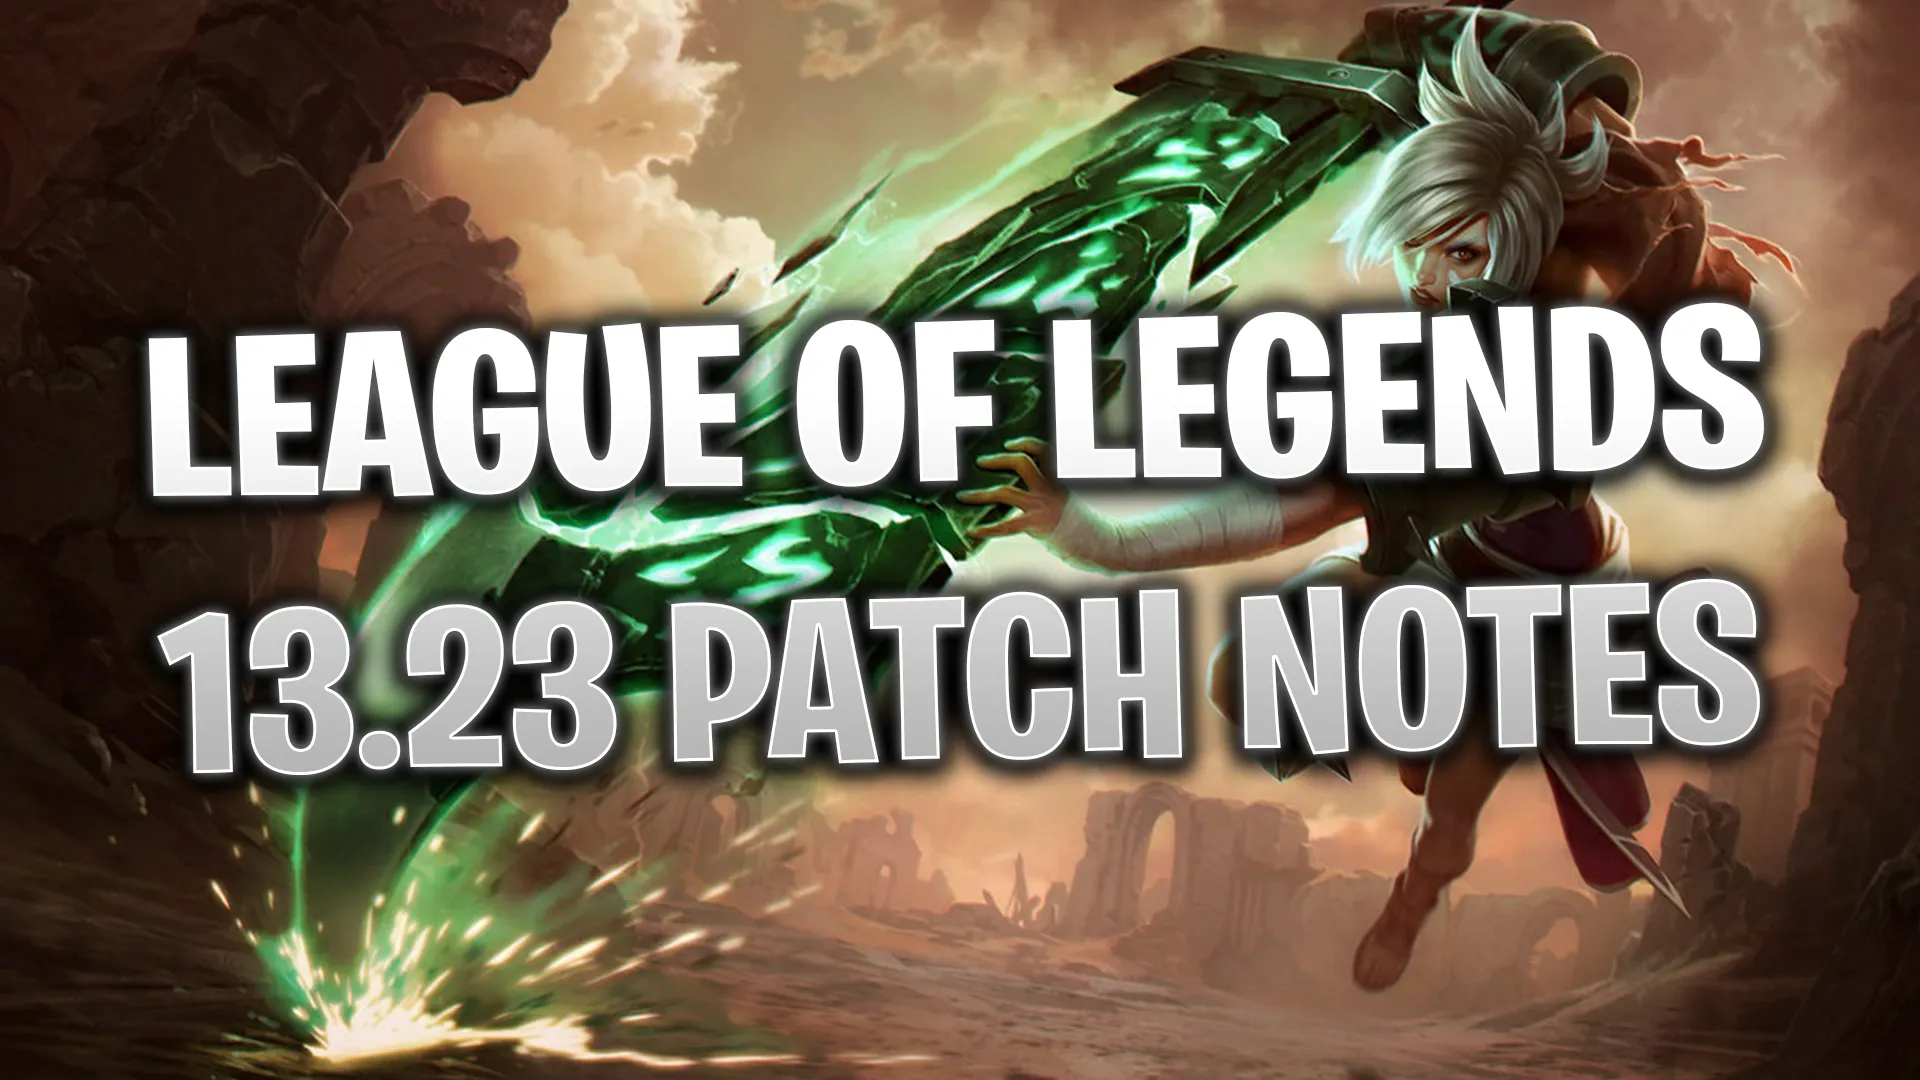 League of Legends Patch 13.20 Patch Notes, LOL Patch 13.20 Release